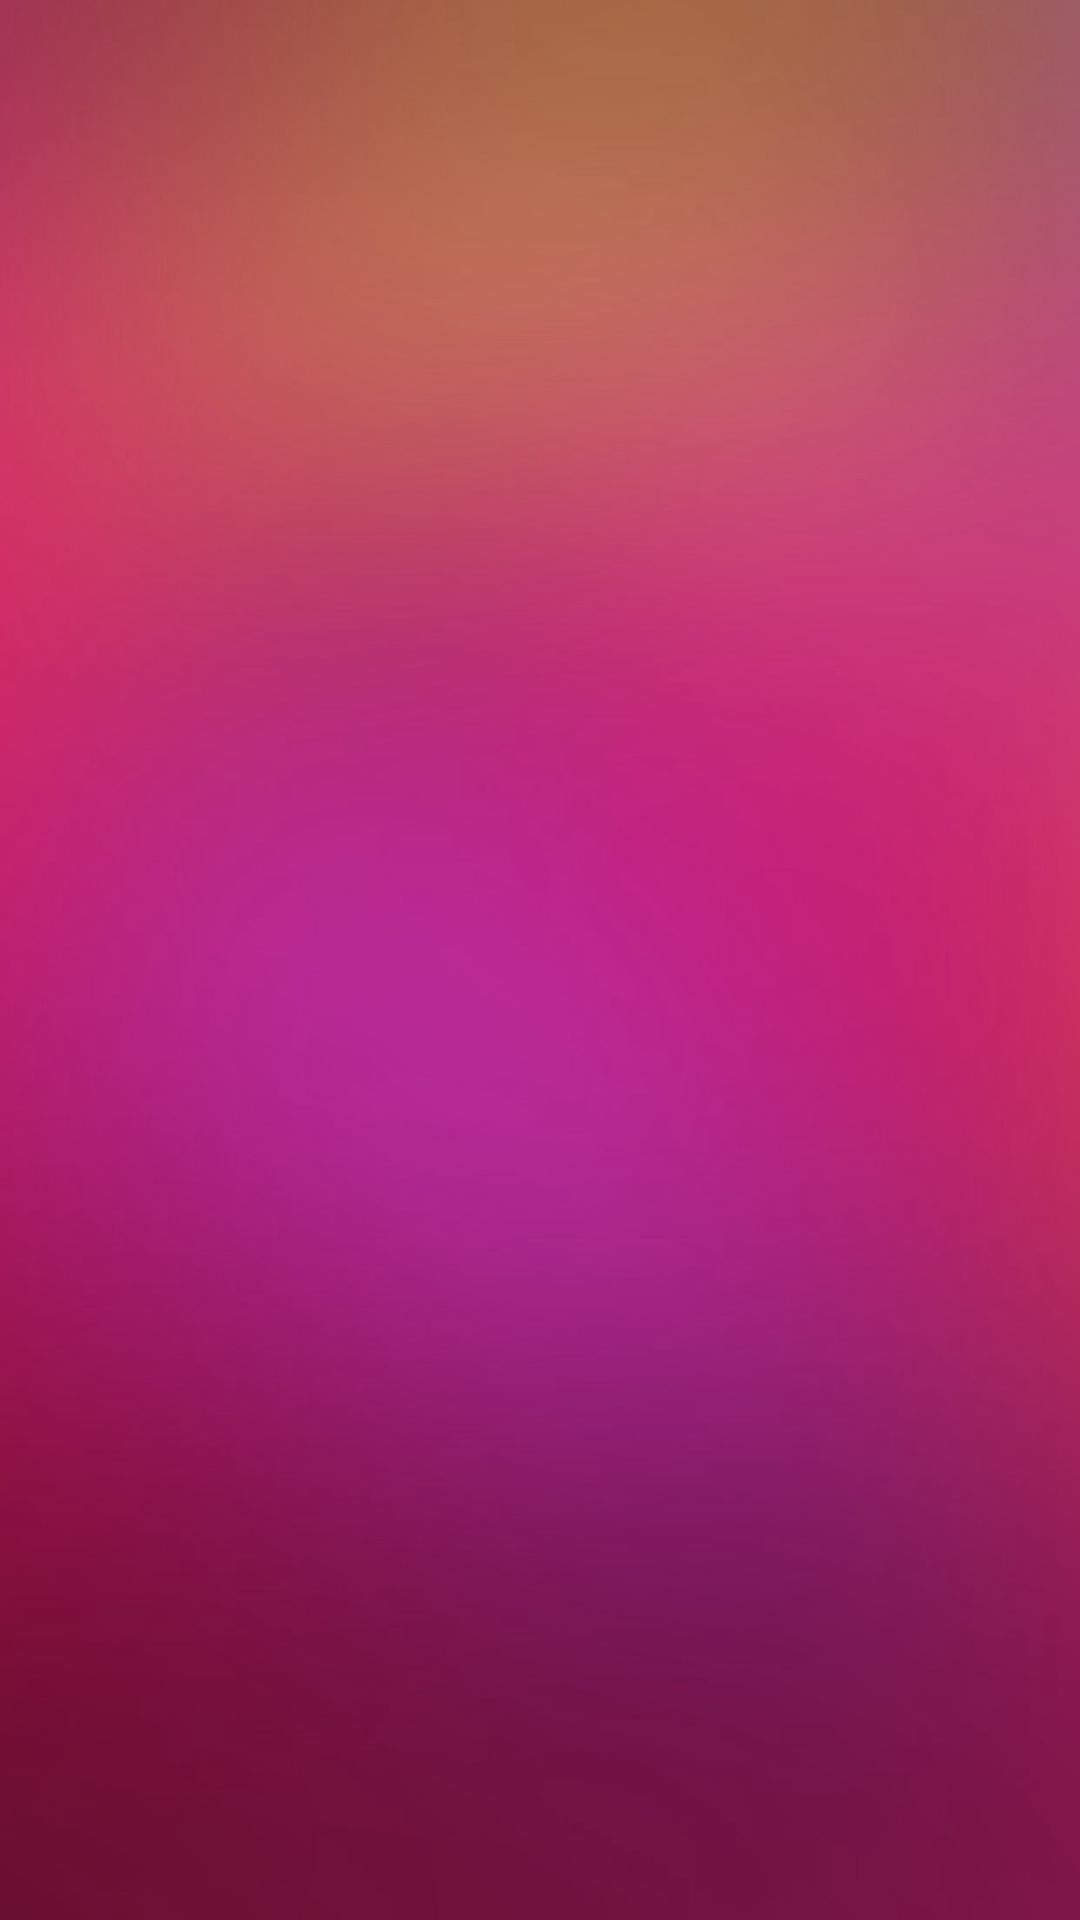 Hot Pink Red Gradation Blur iPhone 7 Wallpaper Download Pink Screen Saver